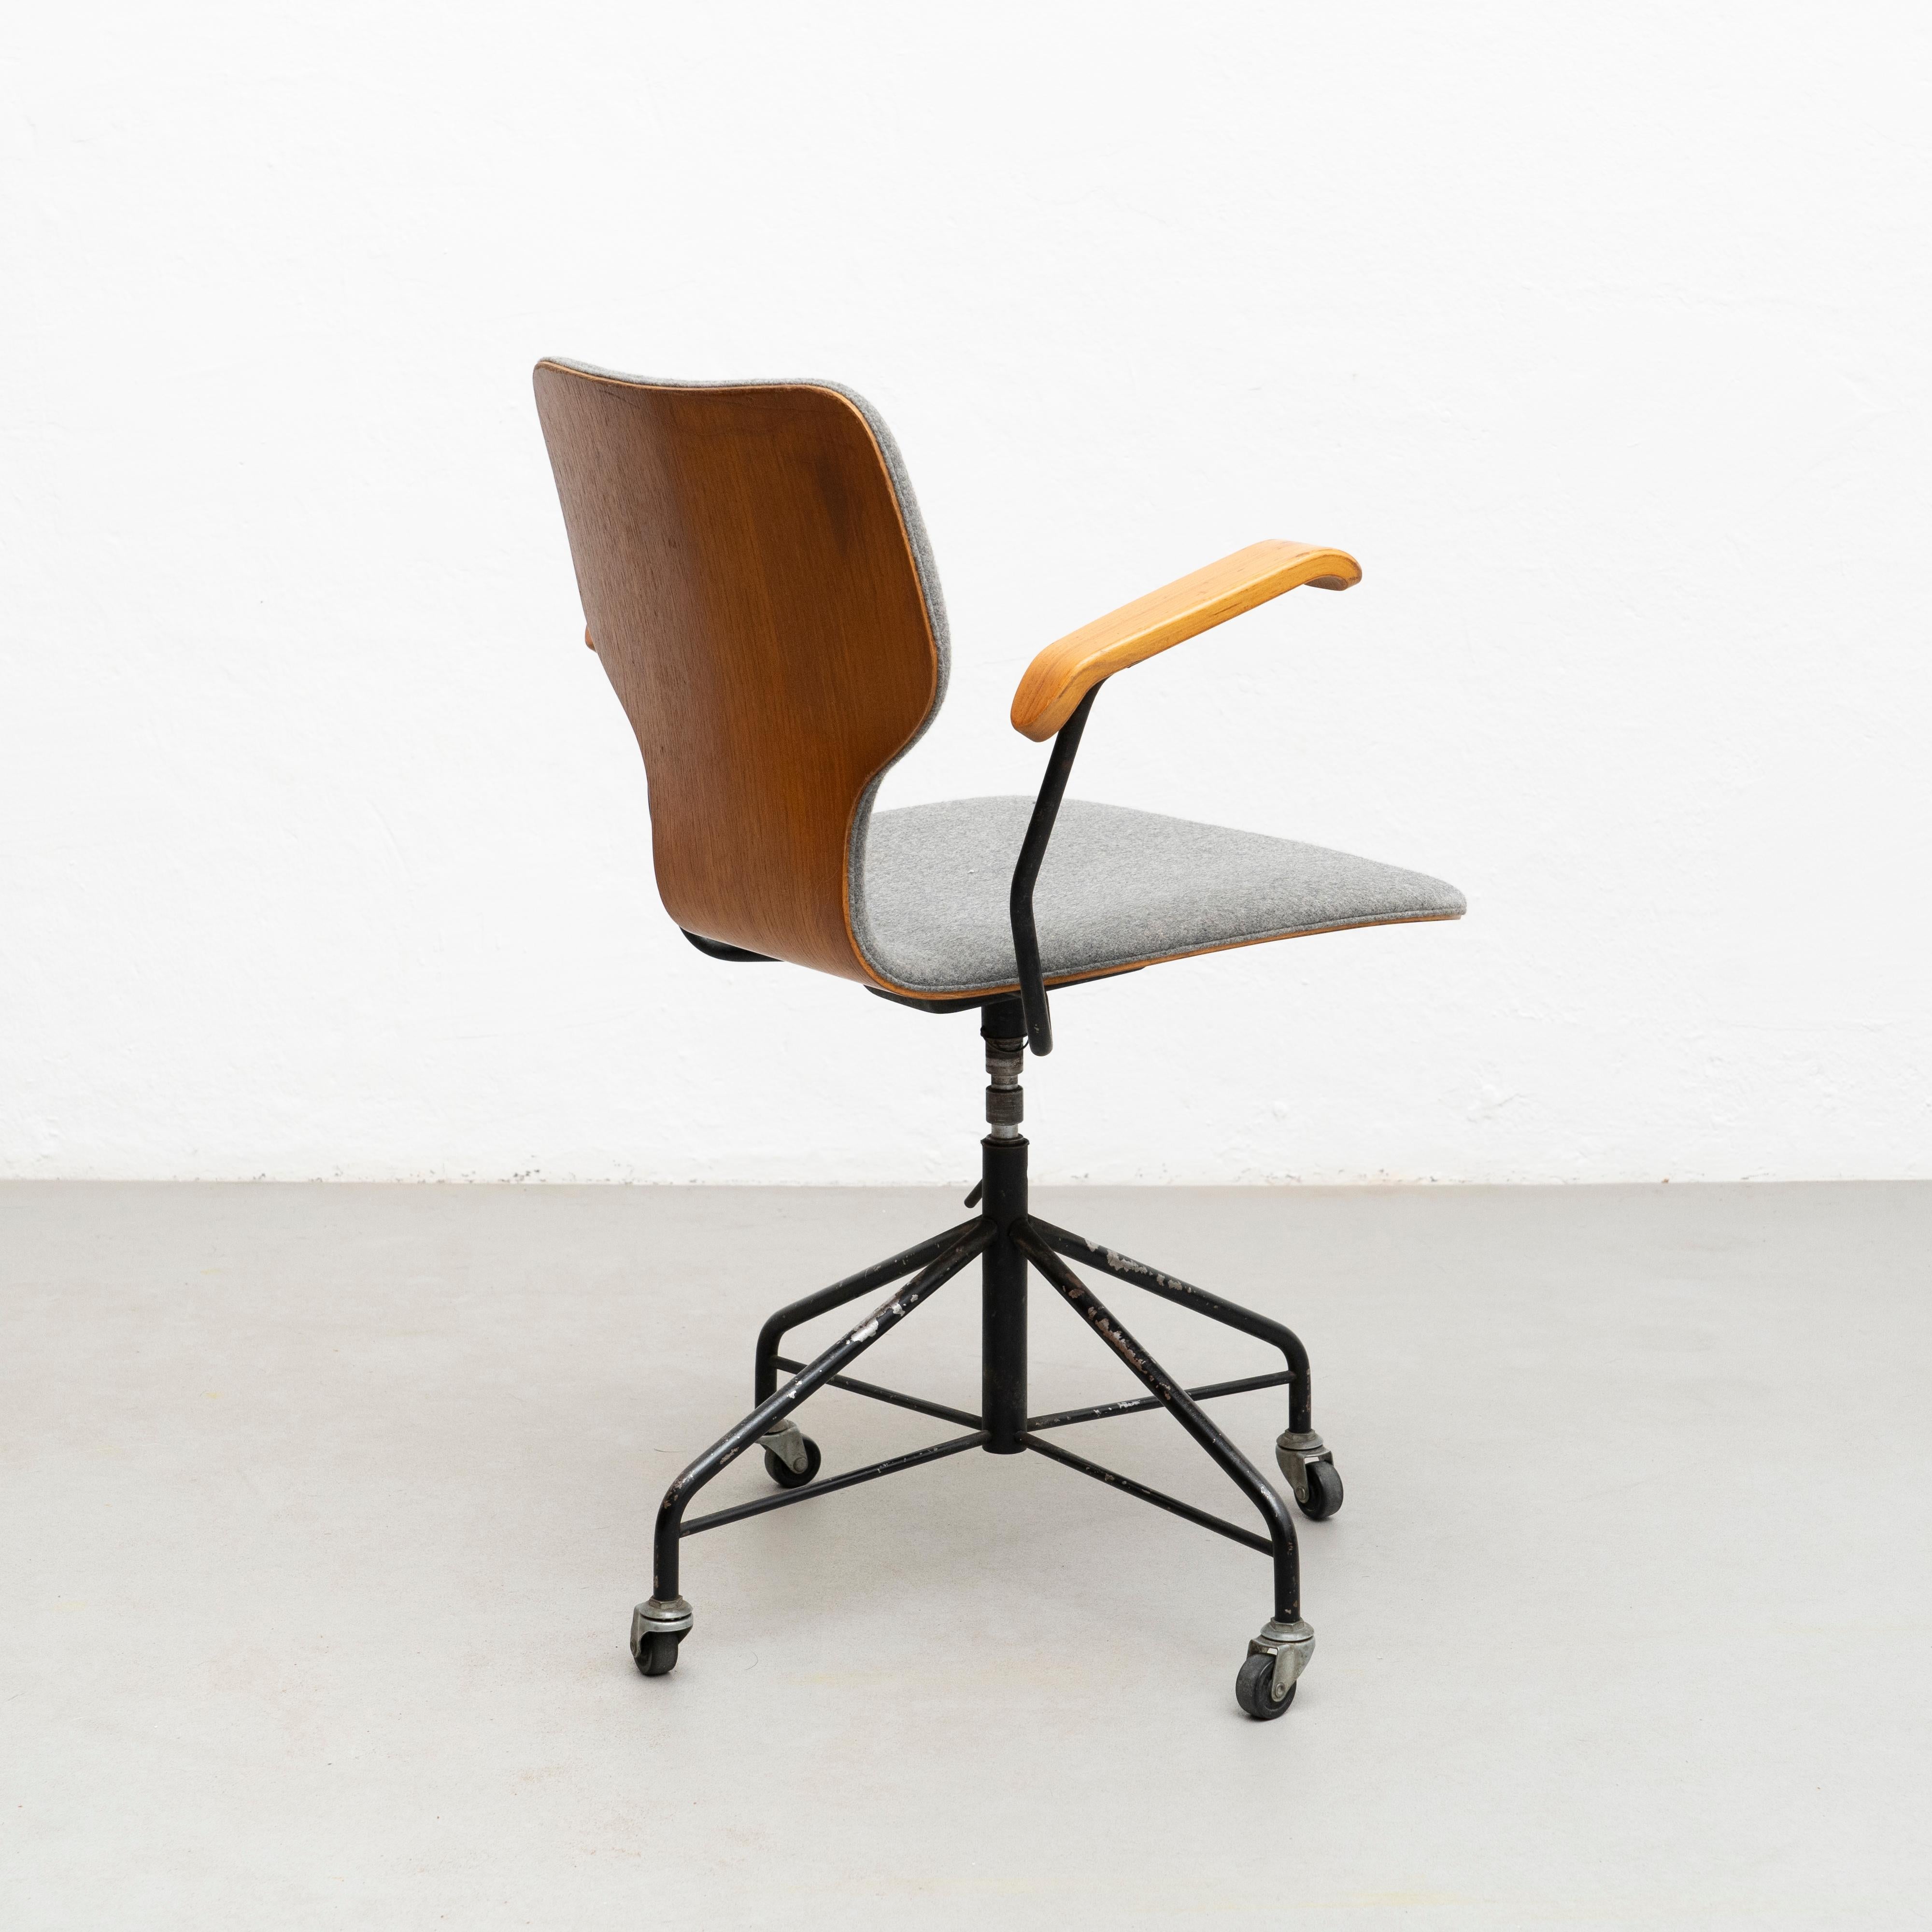 Japanese Isamu Kenmochi Laminated Wood and Grey Fabric Swivel Office Chair, circa 1950